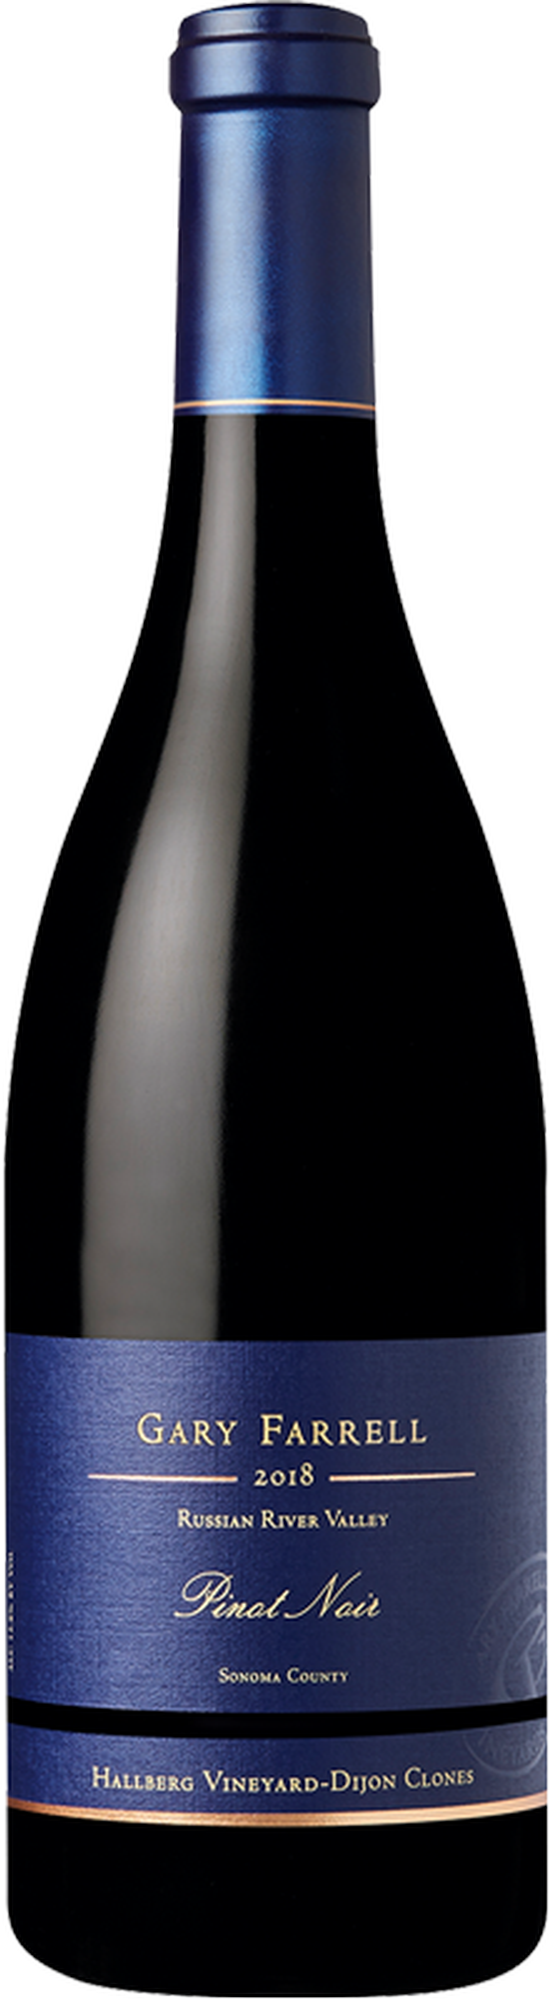 2018 Hallberg Vineyard Dijon Clones Pinot Noir